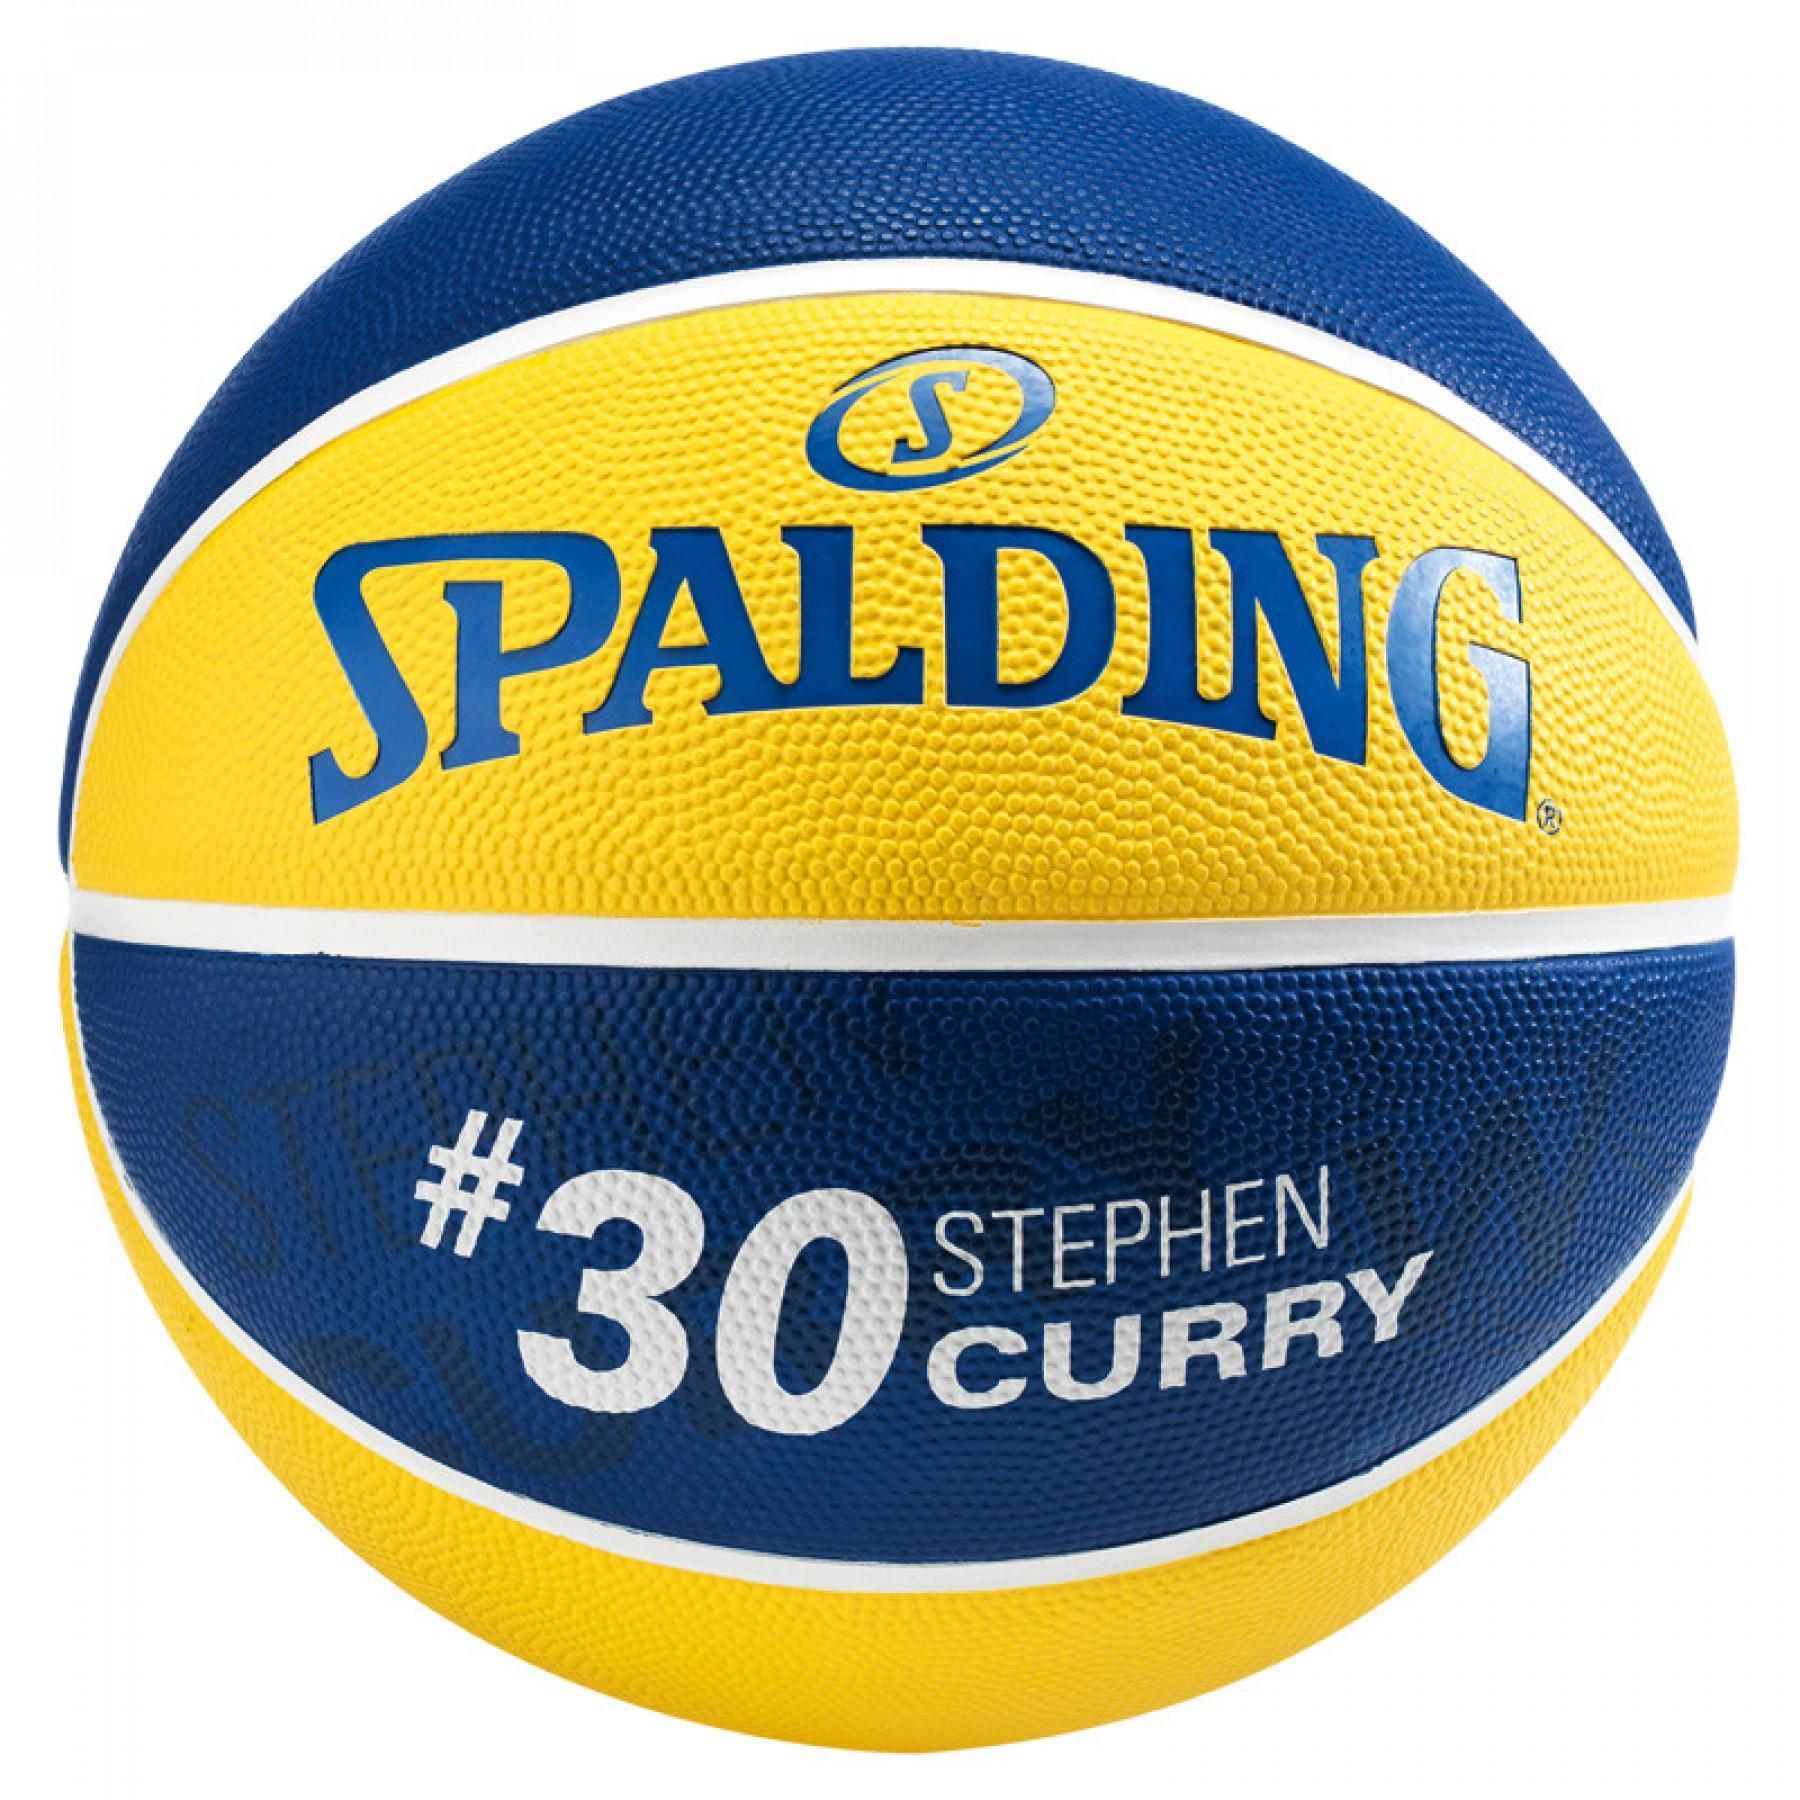 Globo Spalding NBA Player Stephen Curry (83-844z)